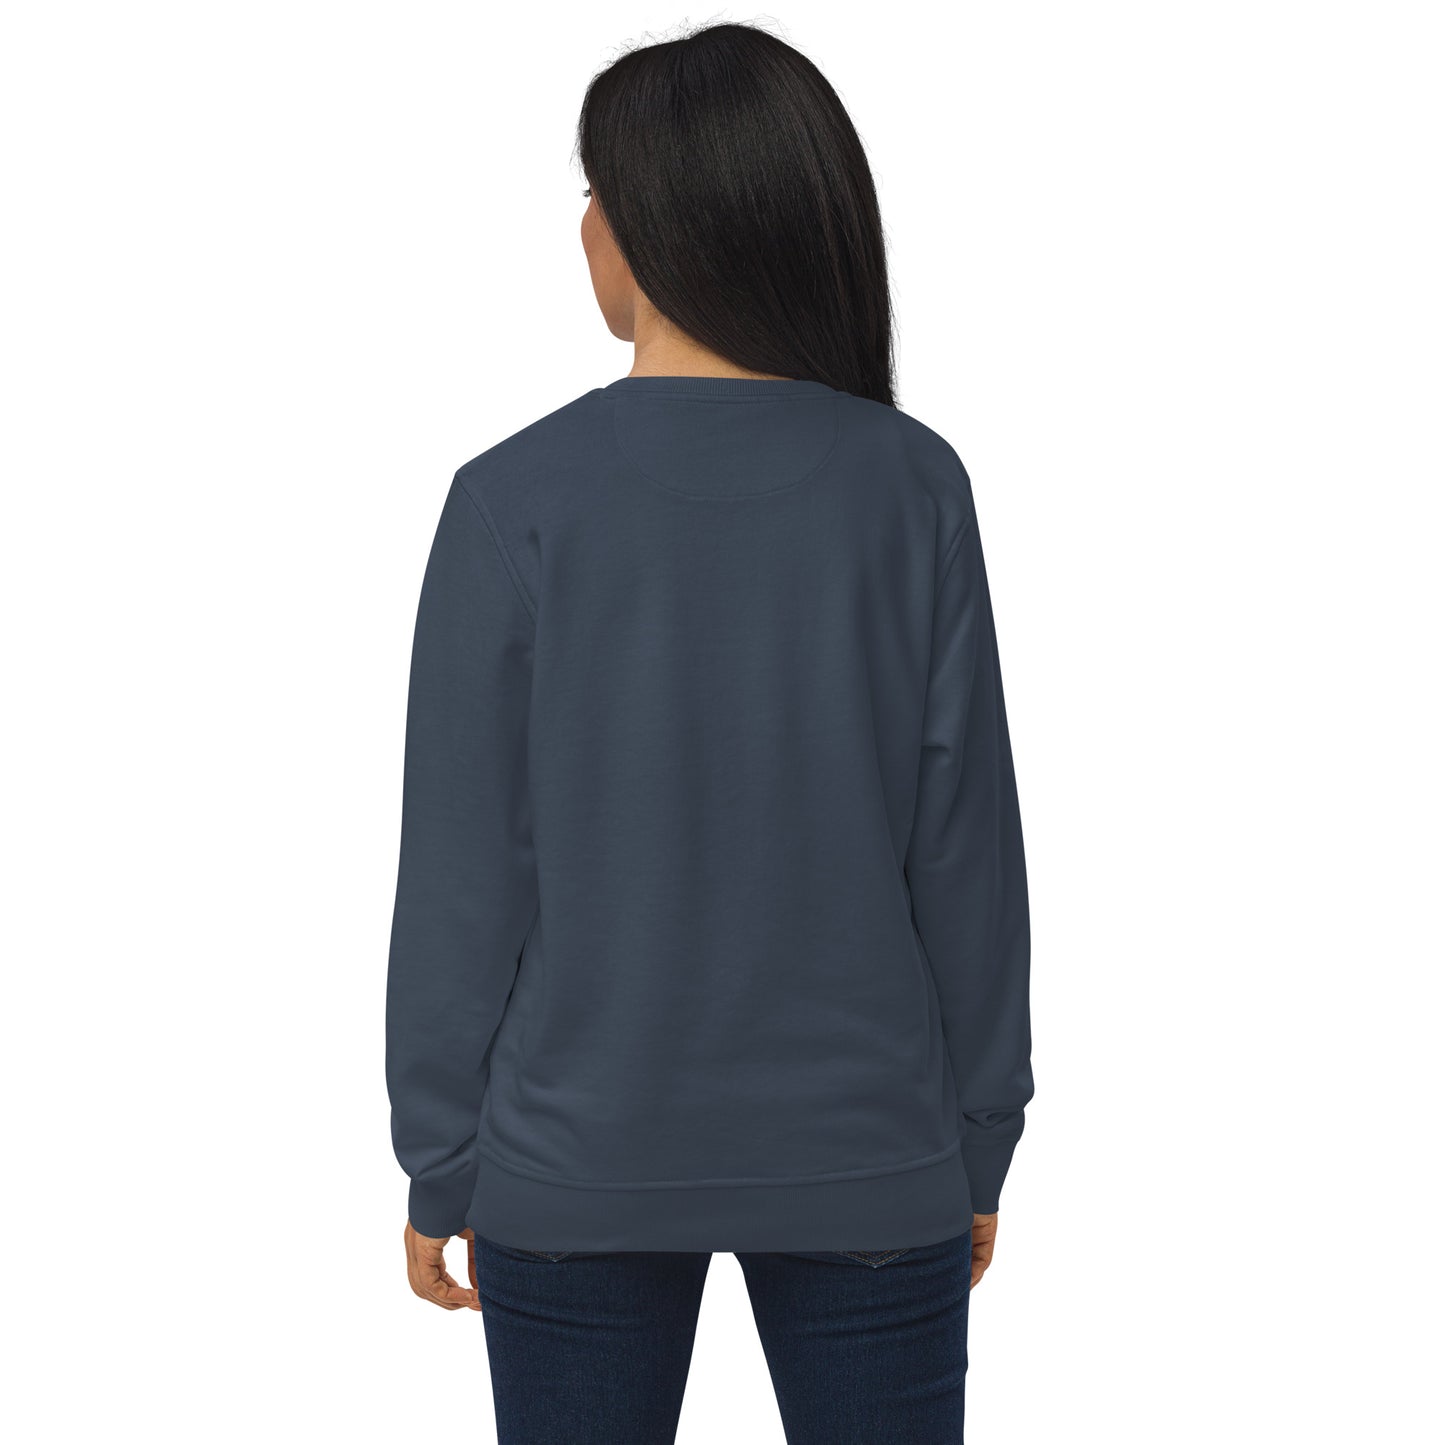 VSRF Organic Sweatshirt (Unisex)